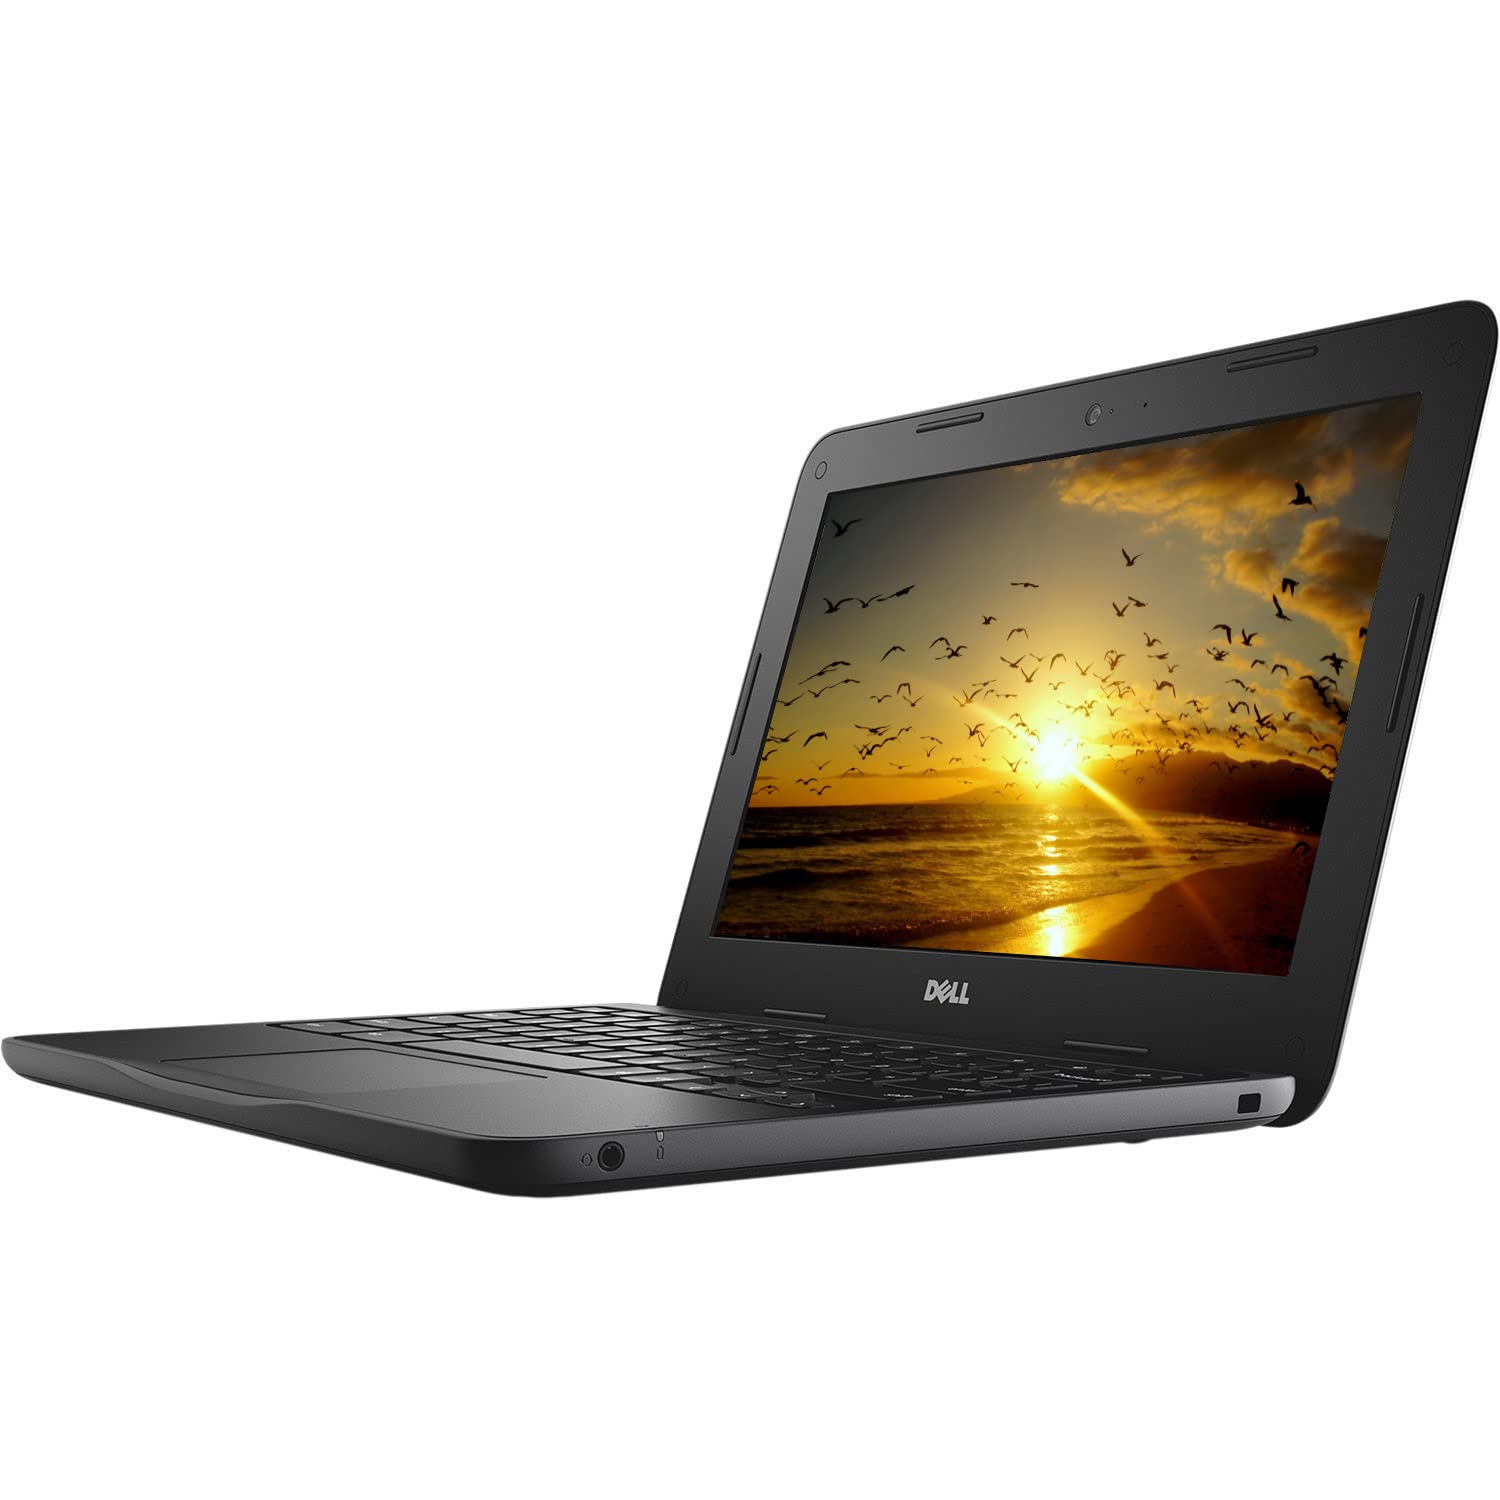 Mua Dell Chromebook 3180 Laptop PC, Intel Celeron N3060 Processor, 4GB Ram,  32GB Solid State Drive, Wi-Fi | Bluetooth, HDMI, USB  Gen 1, Web Camera, Chrome  OS (Renewed) trên Amazon Mỹ